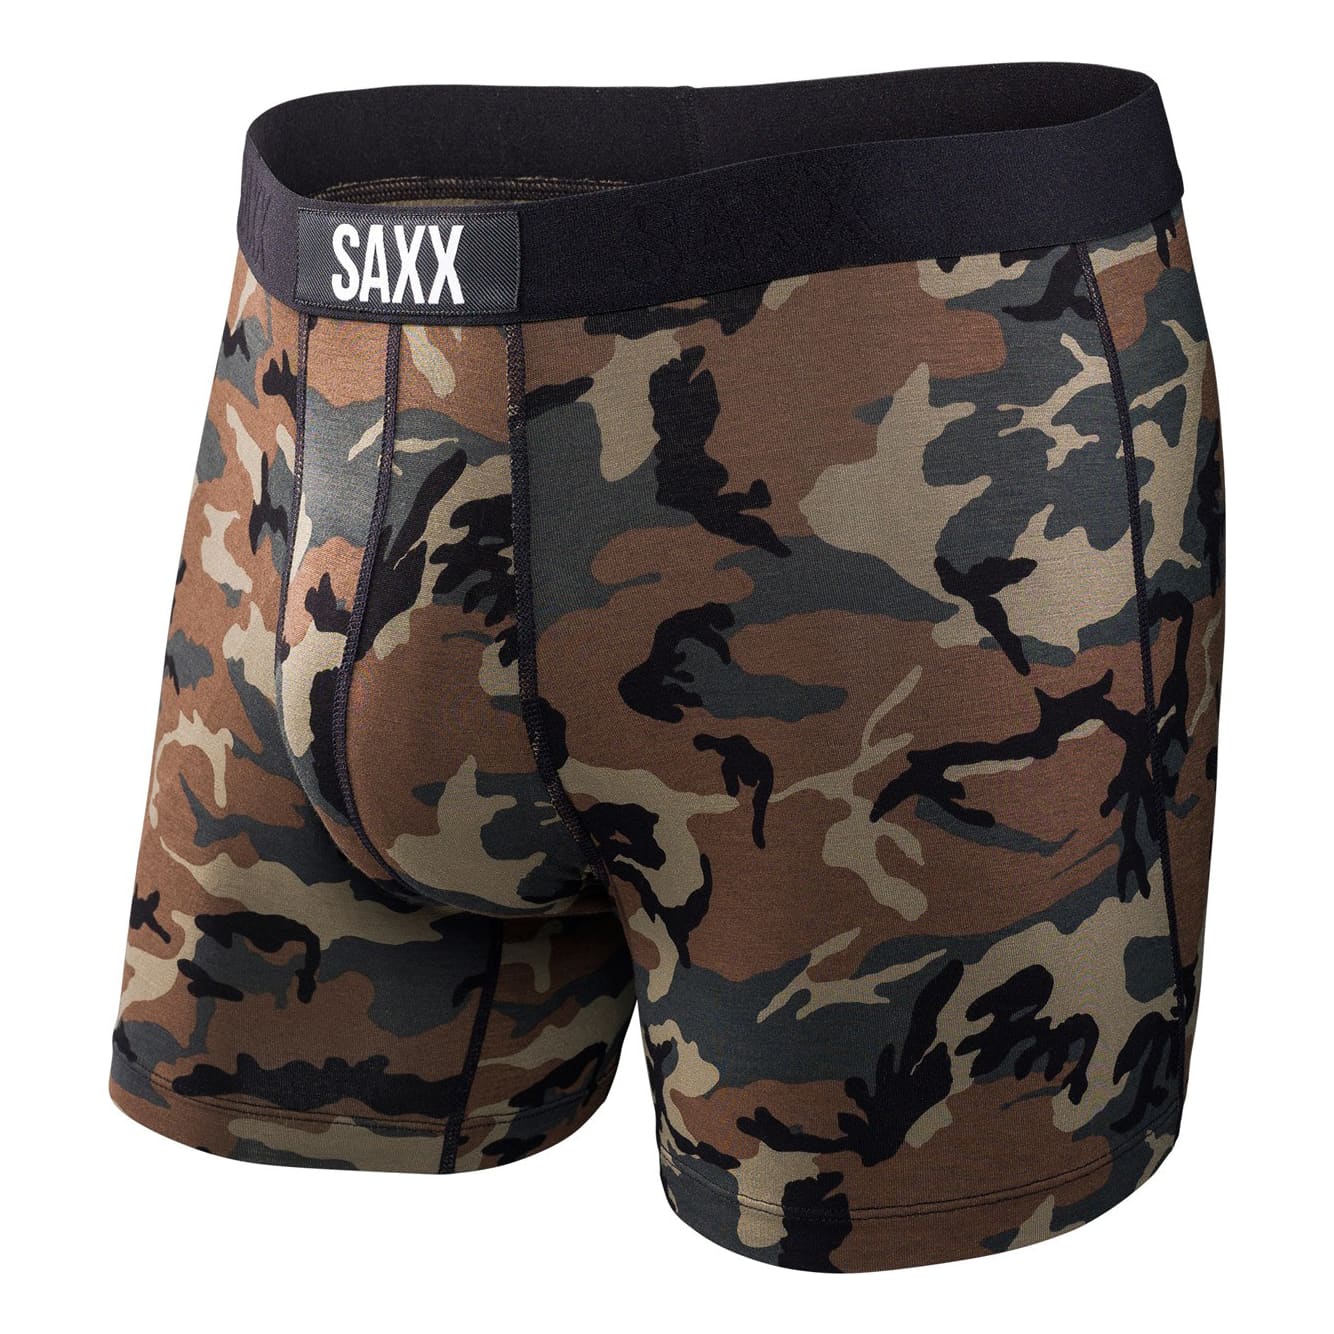 Undercover Brief with Fly Black 2XL by Saxx Underwear